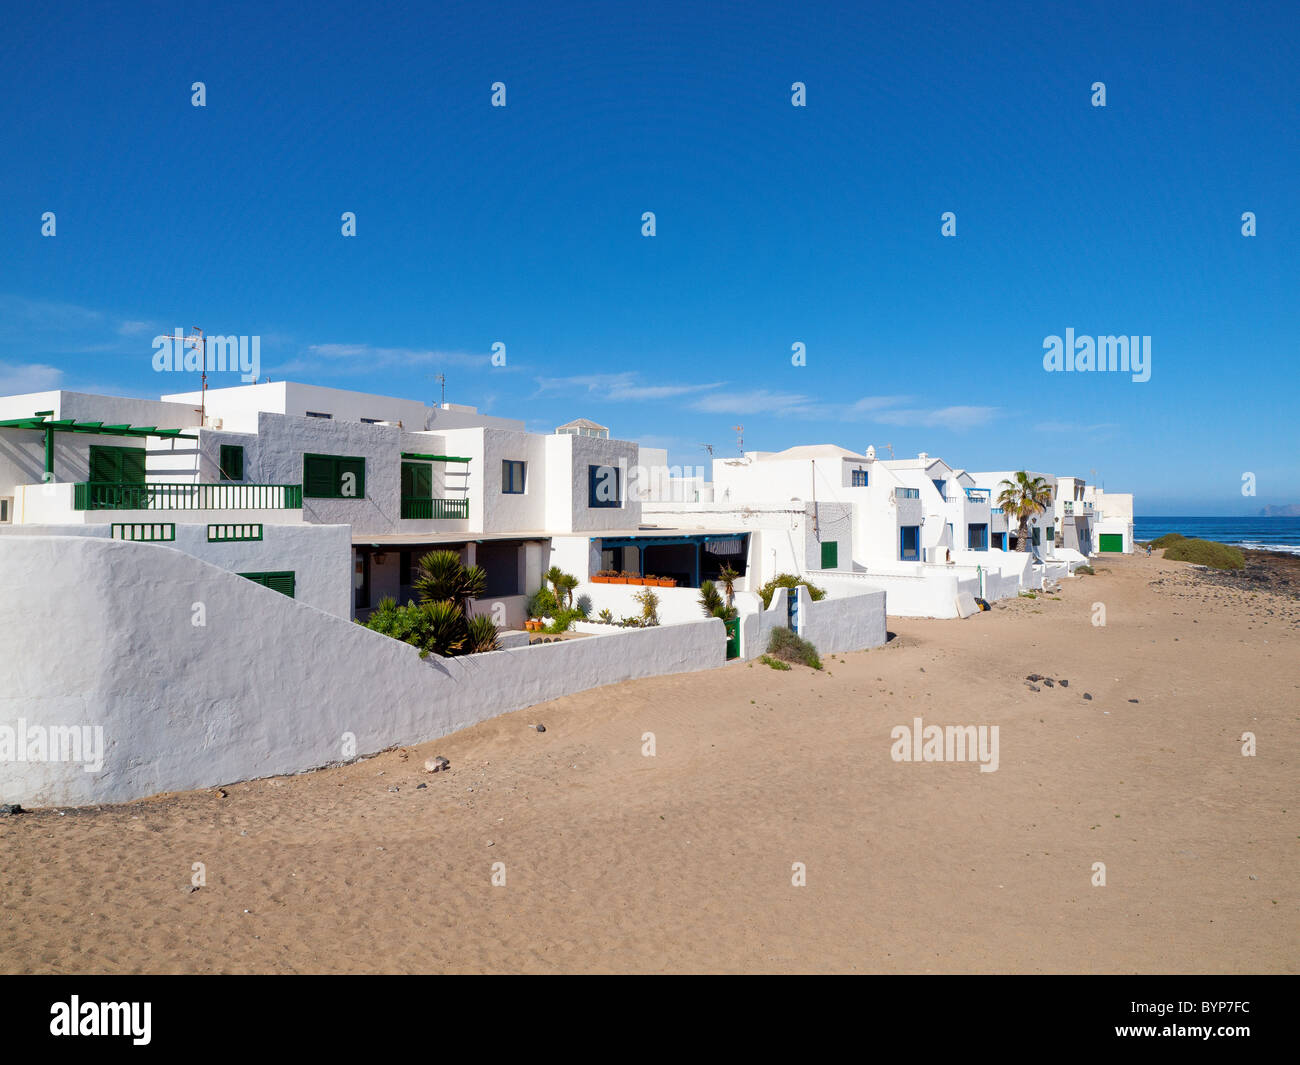 Holiday villas facing the Playa de Famara beach on the undeveloped North West coast of Lanzarote Canary Islands Stock Photo